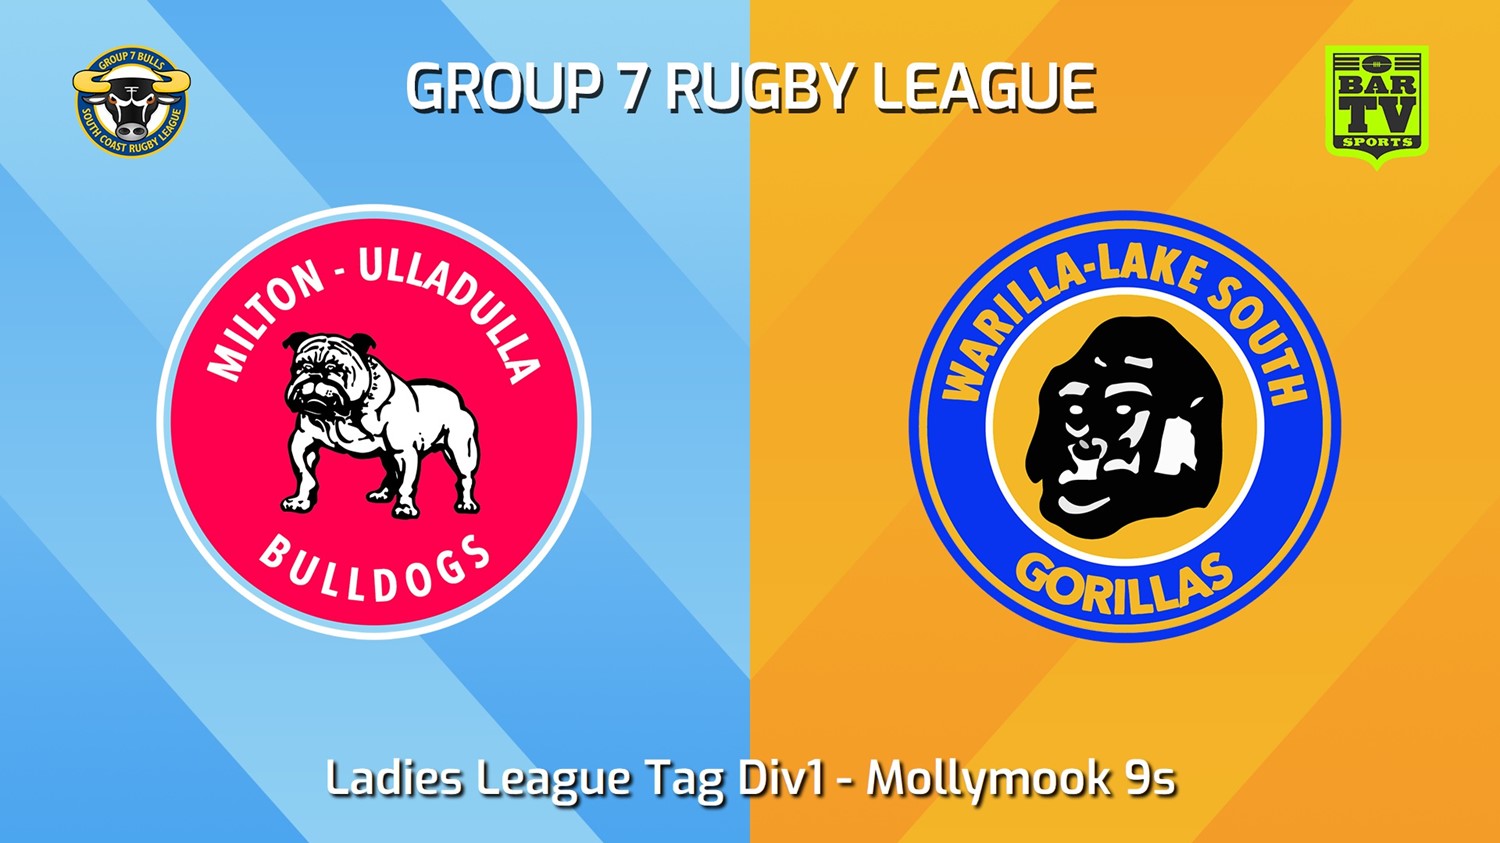 240309-South Coast Mollymook 9s - Ladies League Tag Div1 - Milton-Ulladulla Bulldogs v Warilla-Lake South Gorillas Slate Image